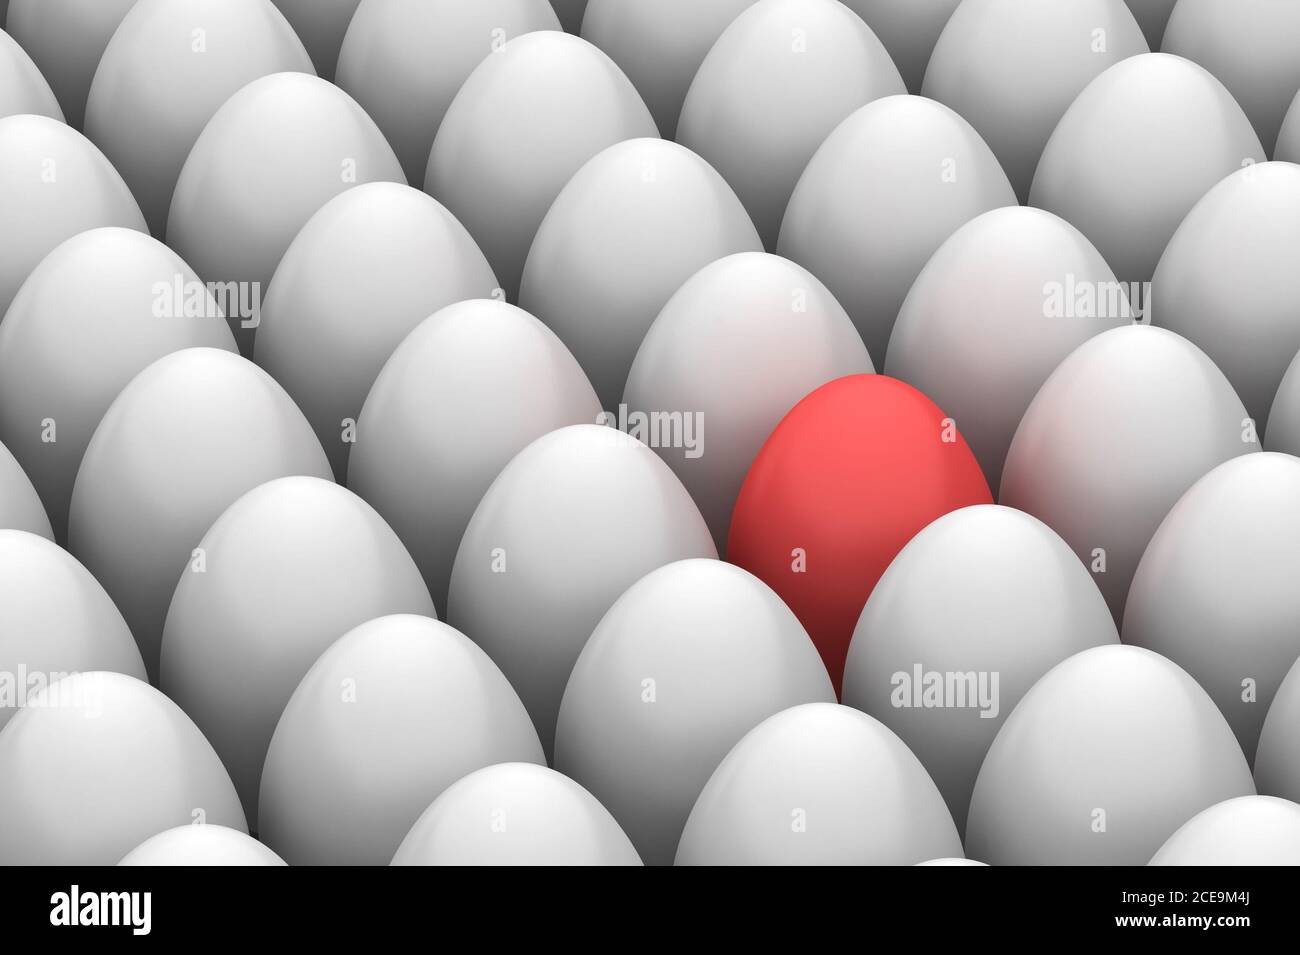 Huevo de pascua roja entre huevos blancos similares Foto de stock